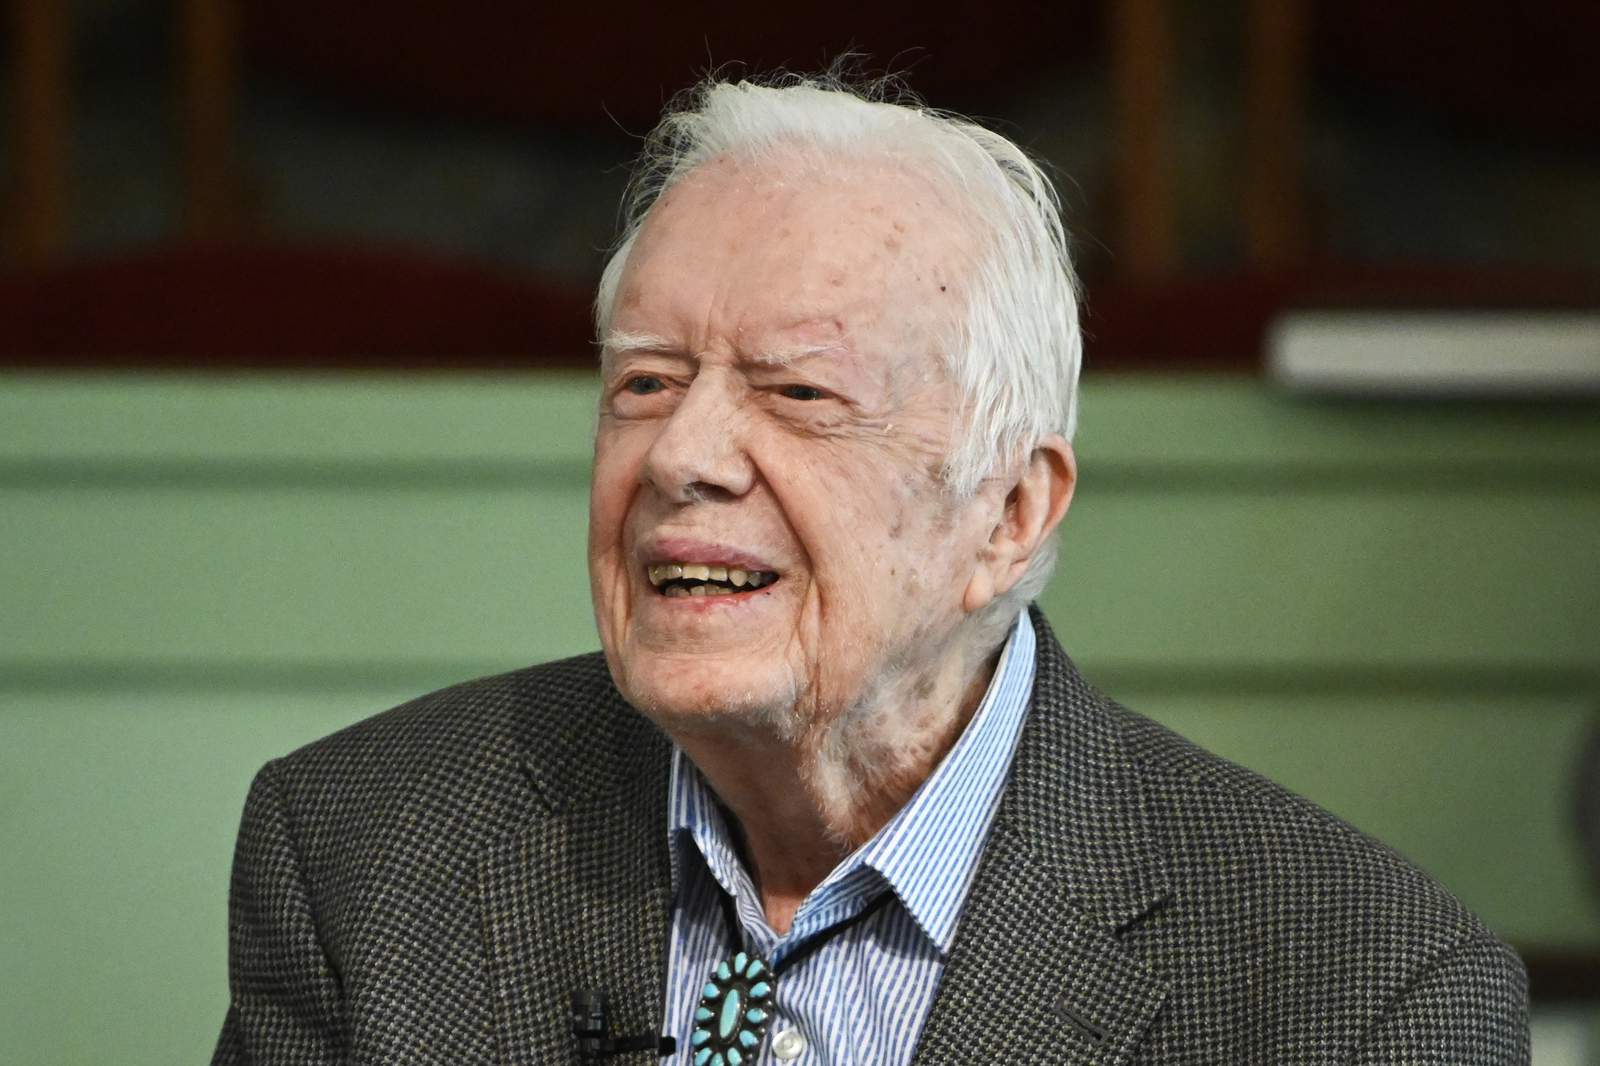 Jimmy Carter says he's sad, angry over Georgia voting bills